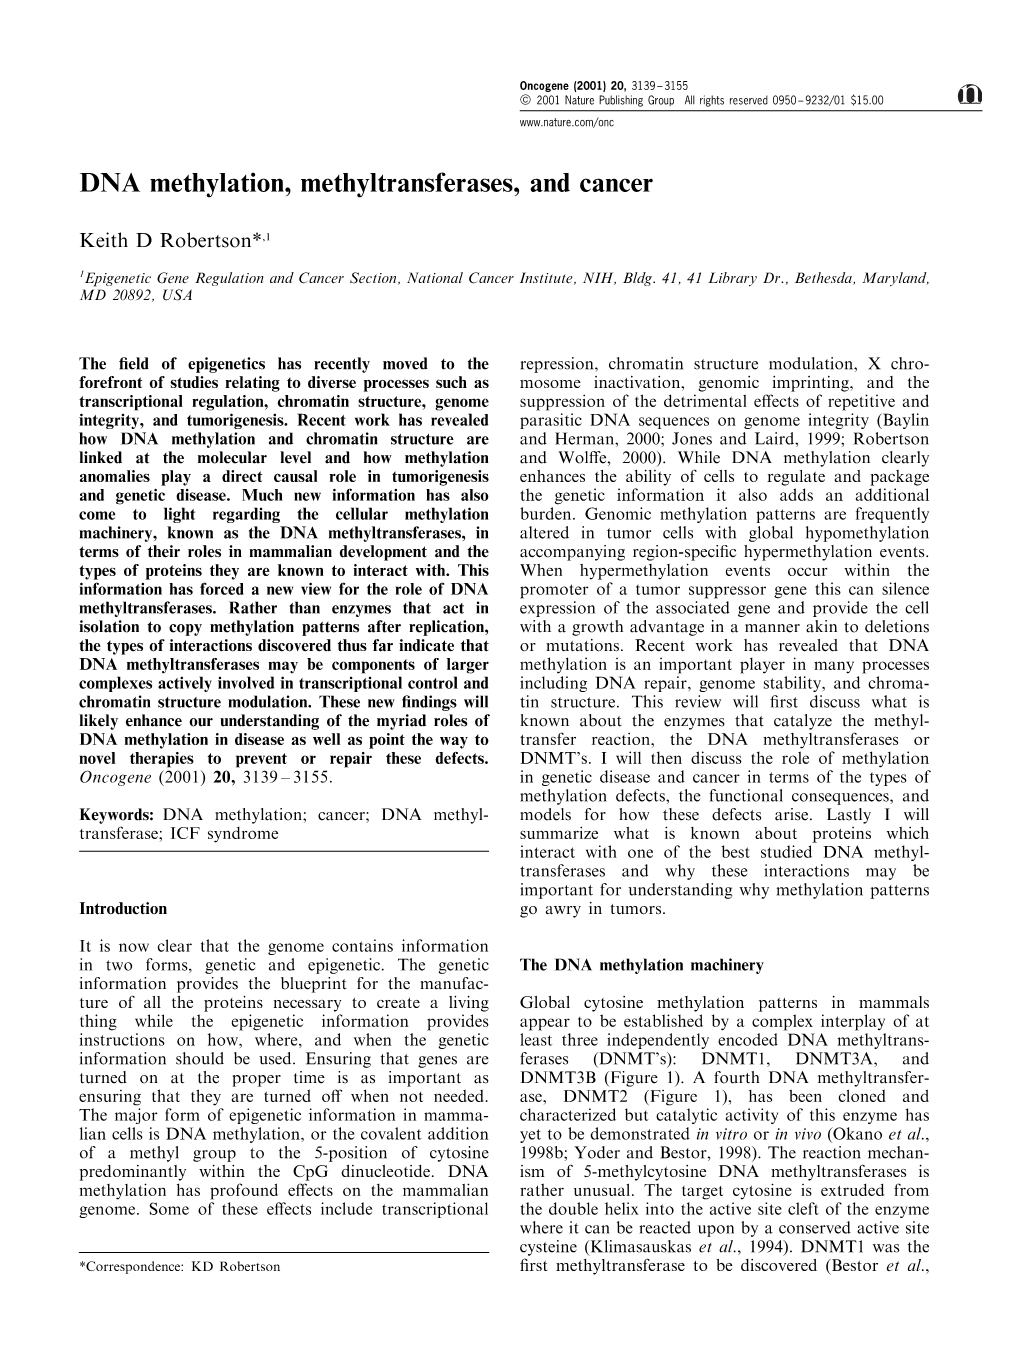 DNA Methylation, Methyltransferases, and Cancer